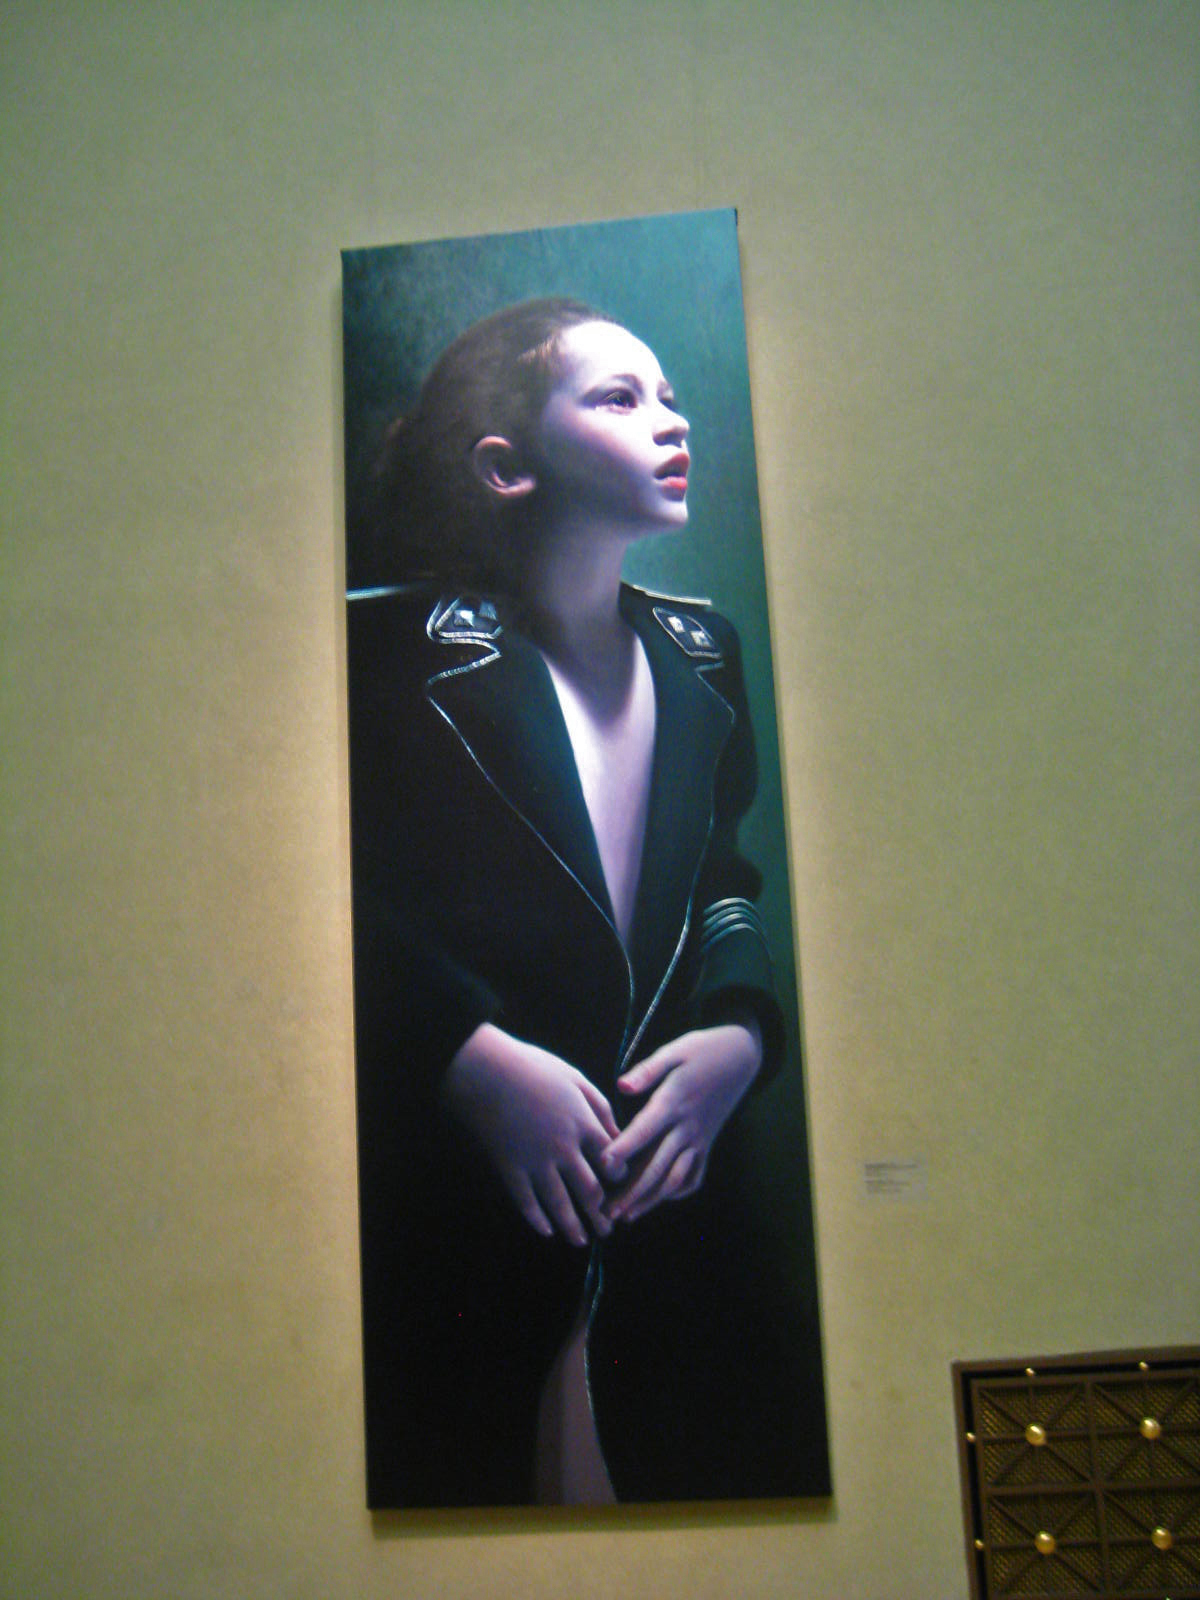 Helnwein - The murmurs of the innocents series